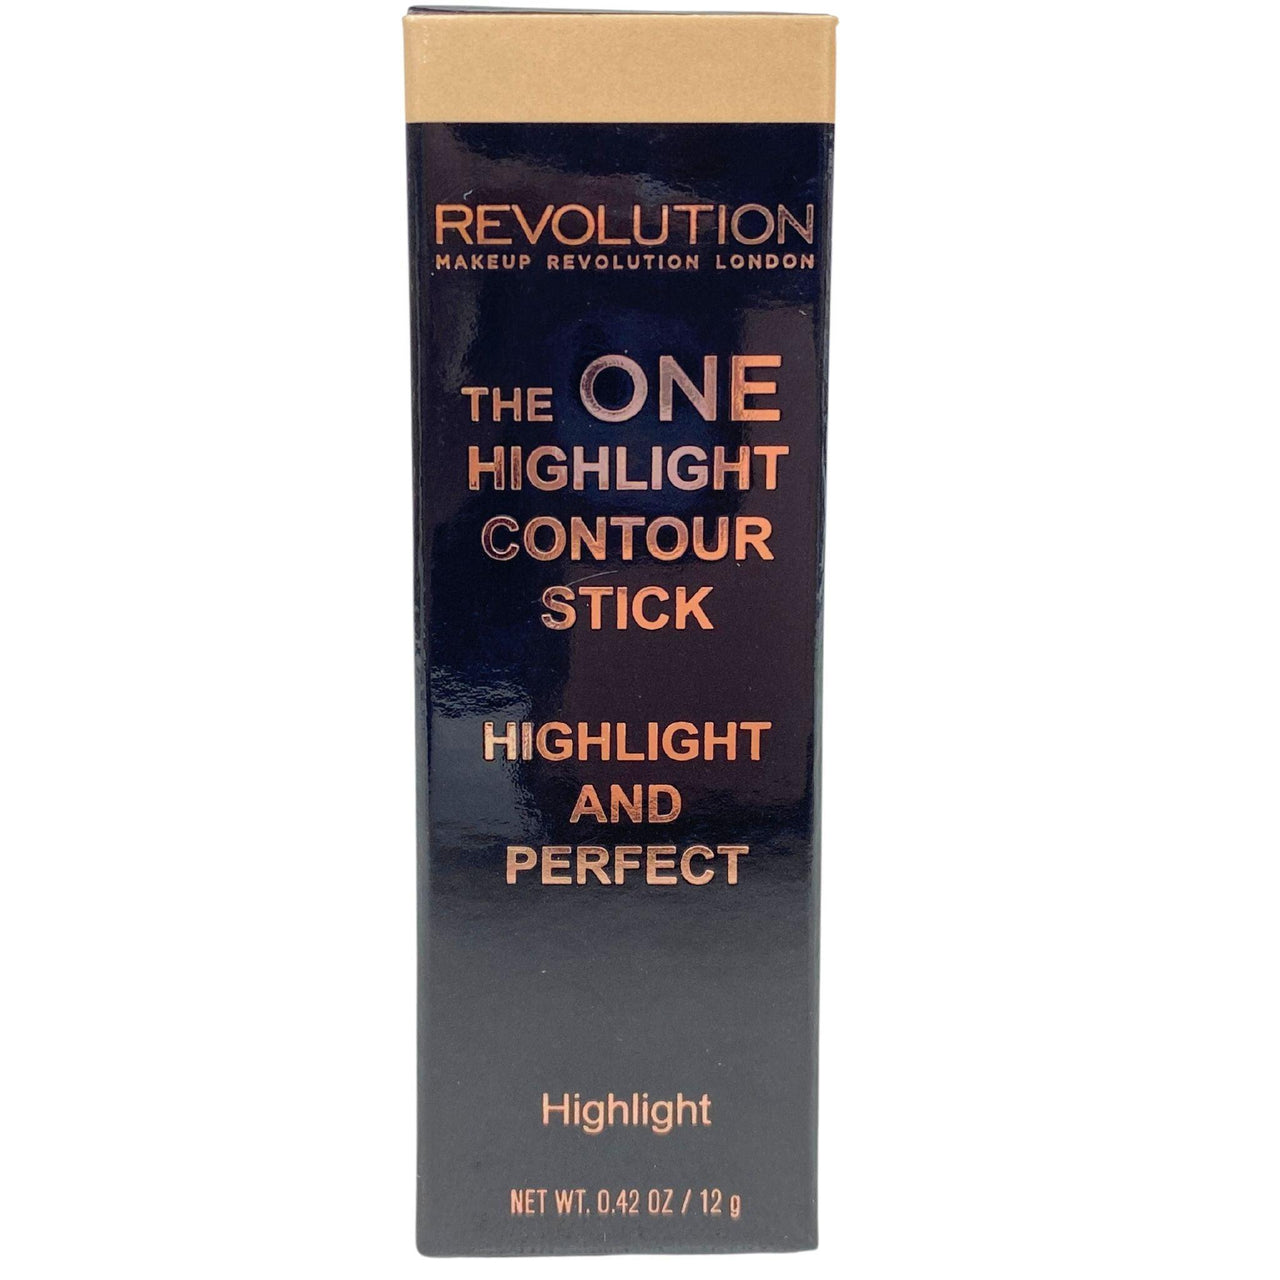 Revolution Makeup London The One Highlight Contour Stick Highlight & Perfect "Highlight" 0.42oz (72 Pcs Lot) - Discount Wholesalers Inc